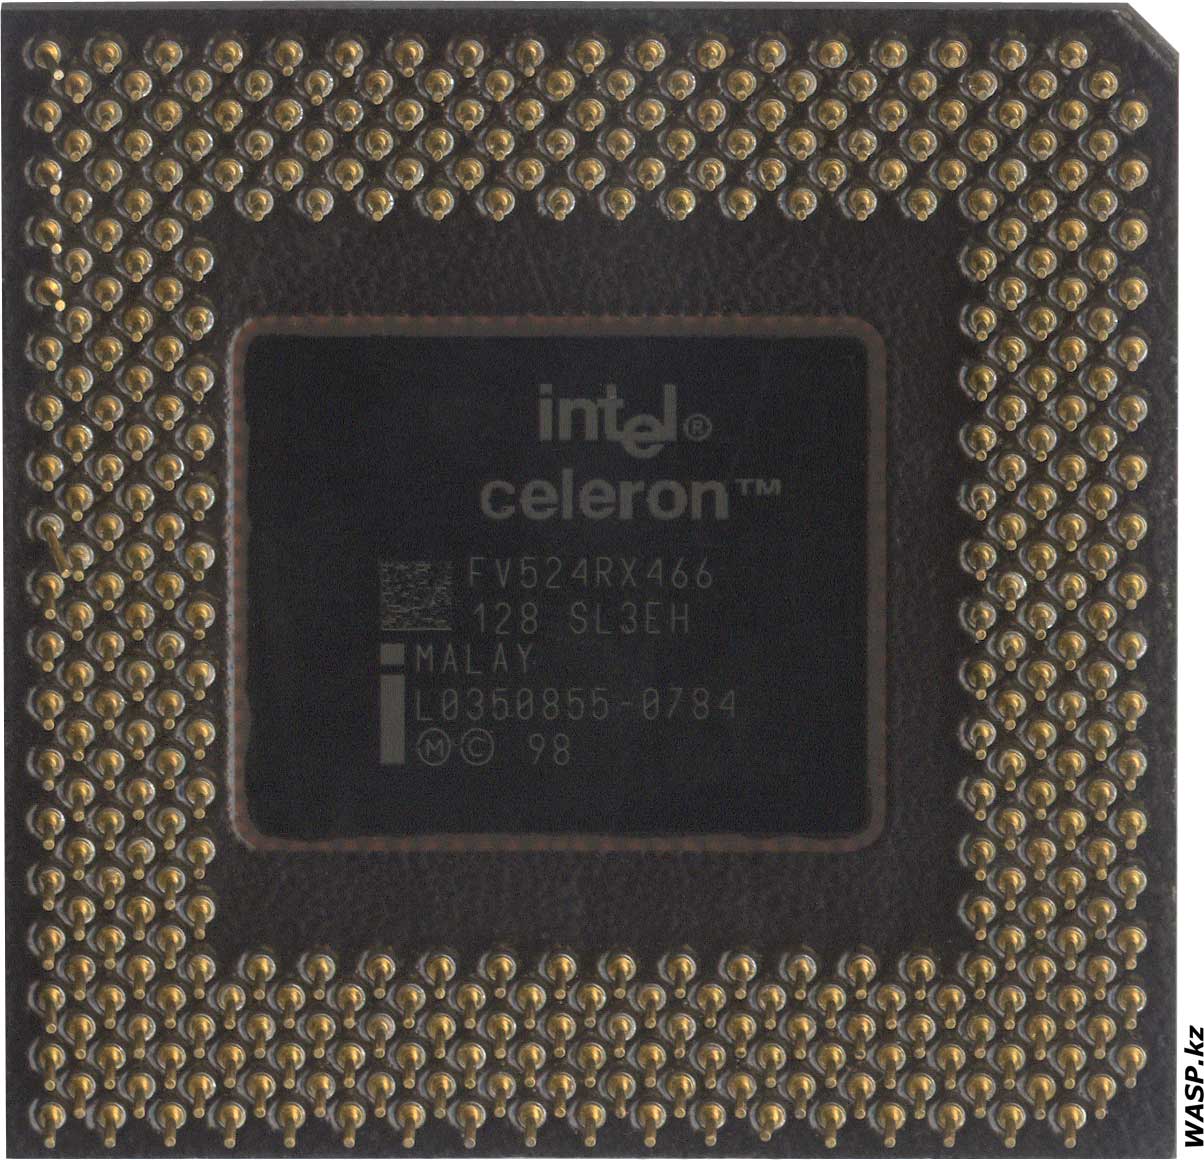 Intel Celeron 466 MHG Mendocino описание процессора на Сокет 370